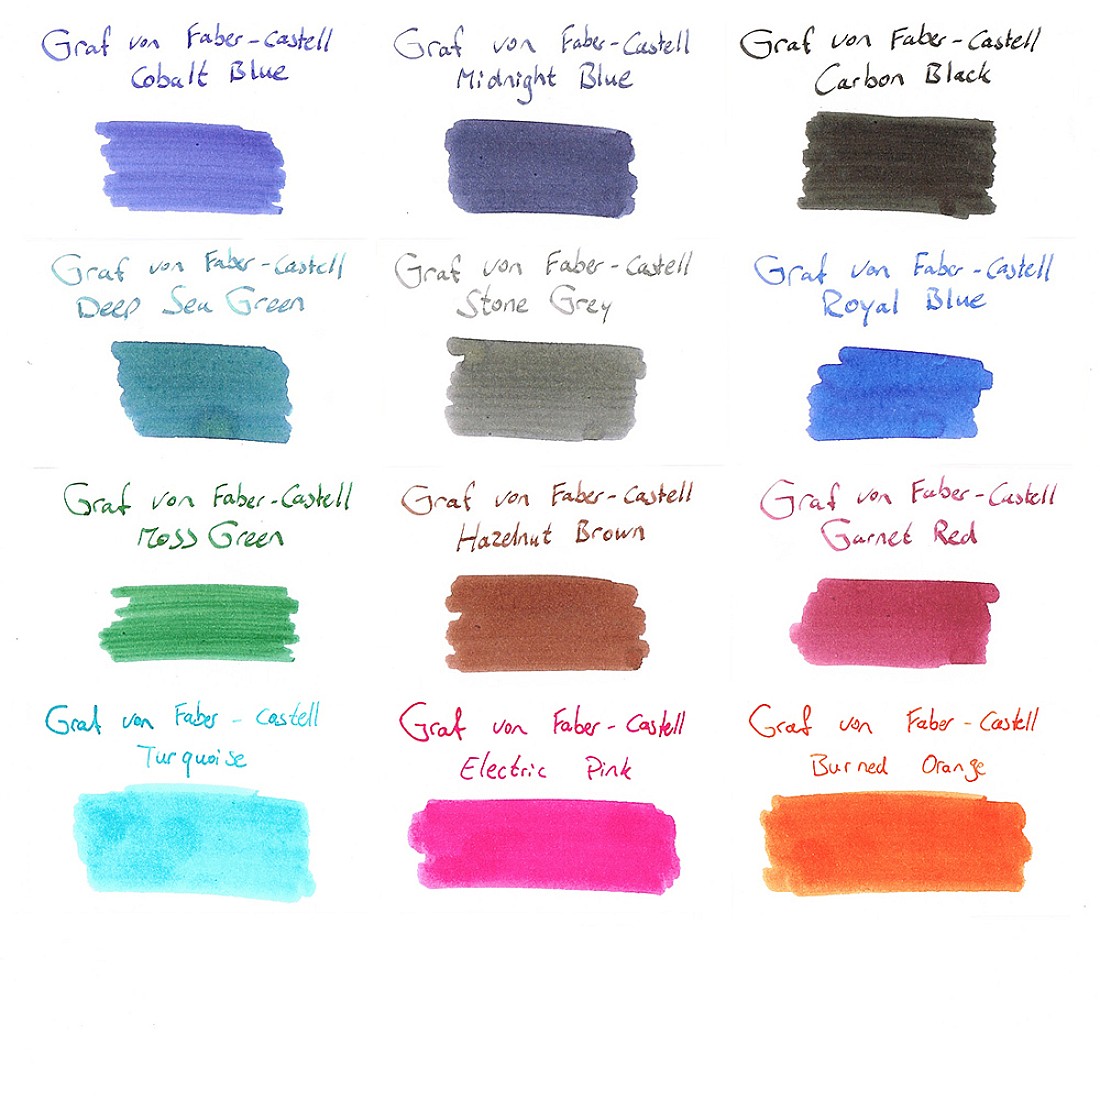 von Faber-Castell Ink - Ink Cartridges (10 colors) Appelboom.com